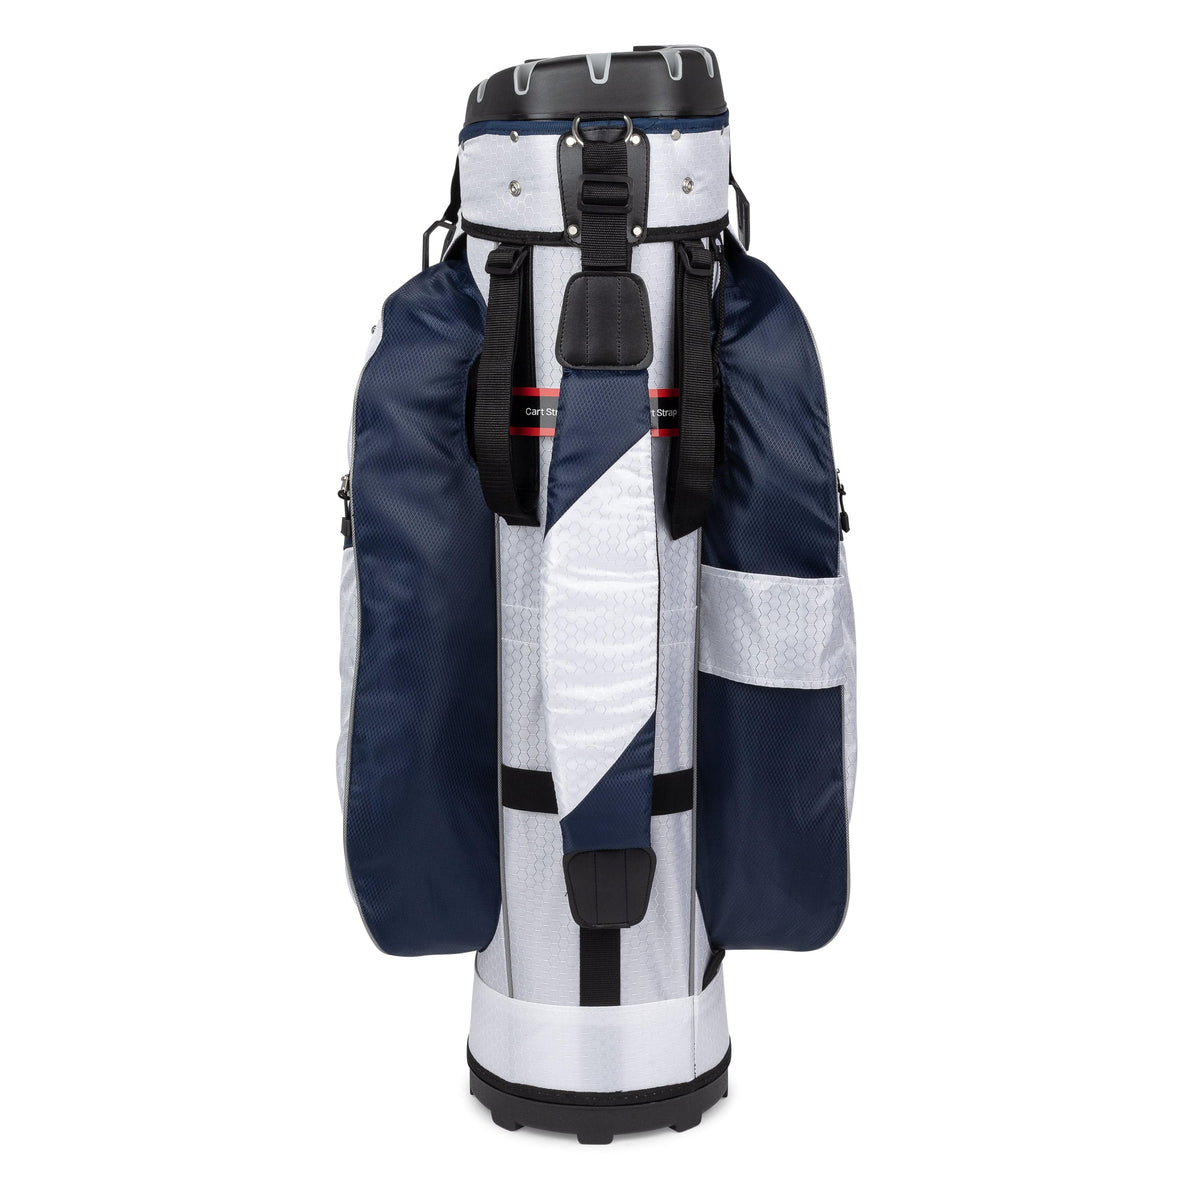 Founders Club Premium Organizer 14 Way Golf Cart Bag - White Navy